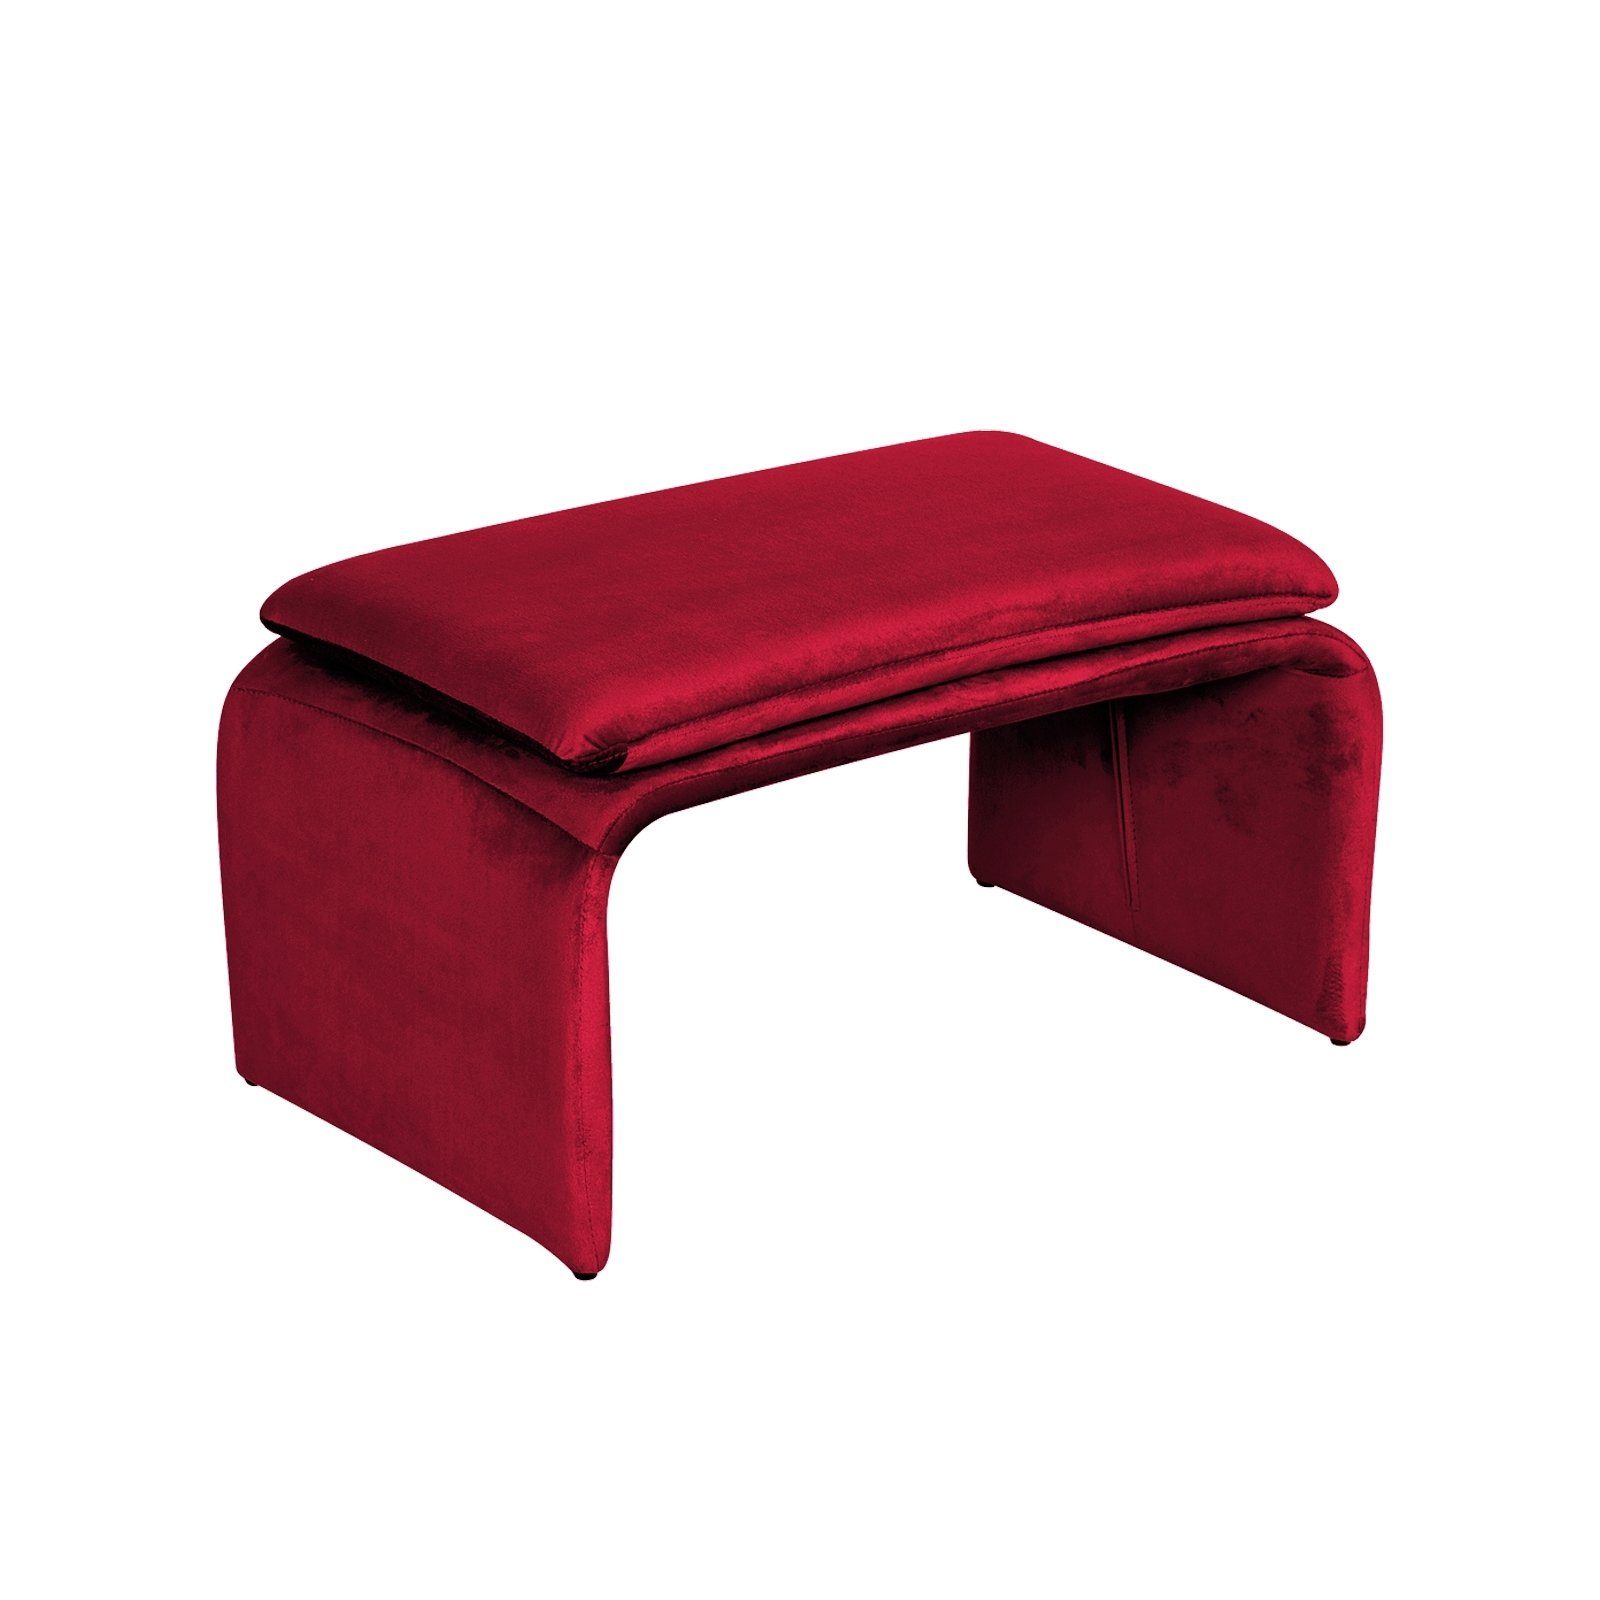 Unifarben (Stück, Sitzhocker 1 St), HTI-Living Rot Hocker Sitzhocker Vance